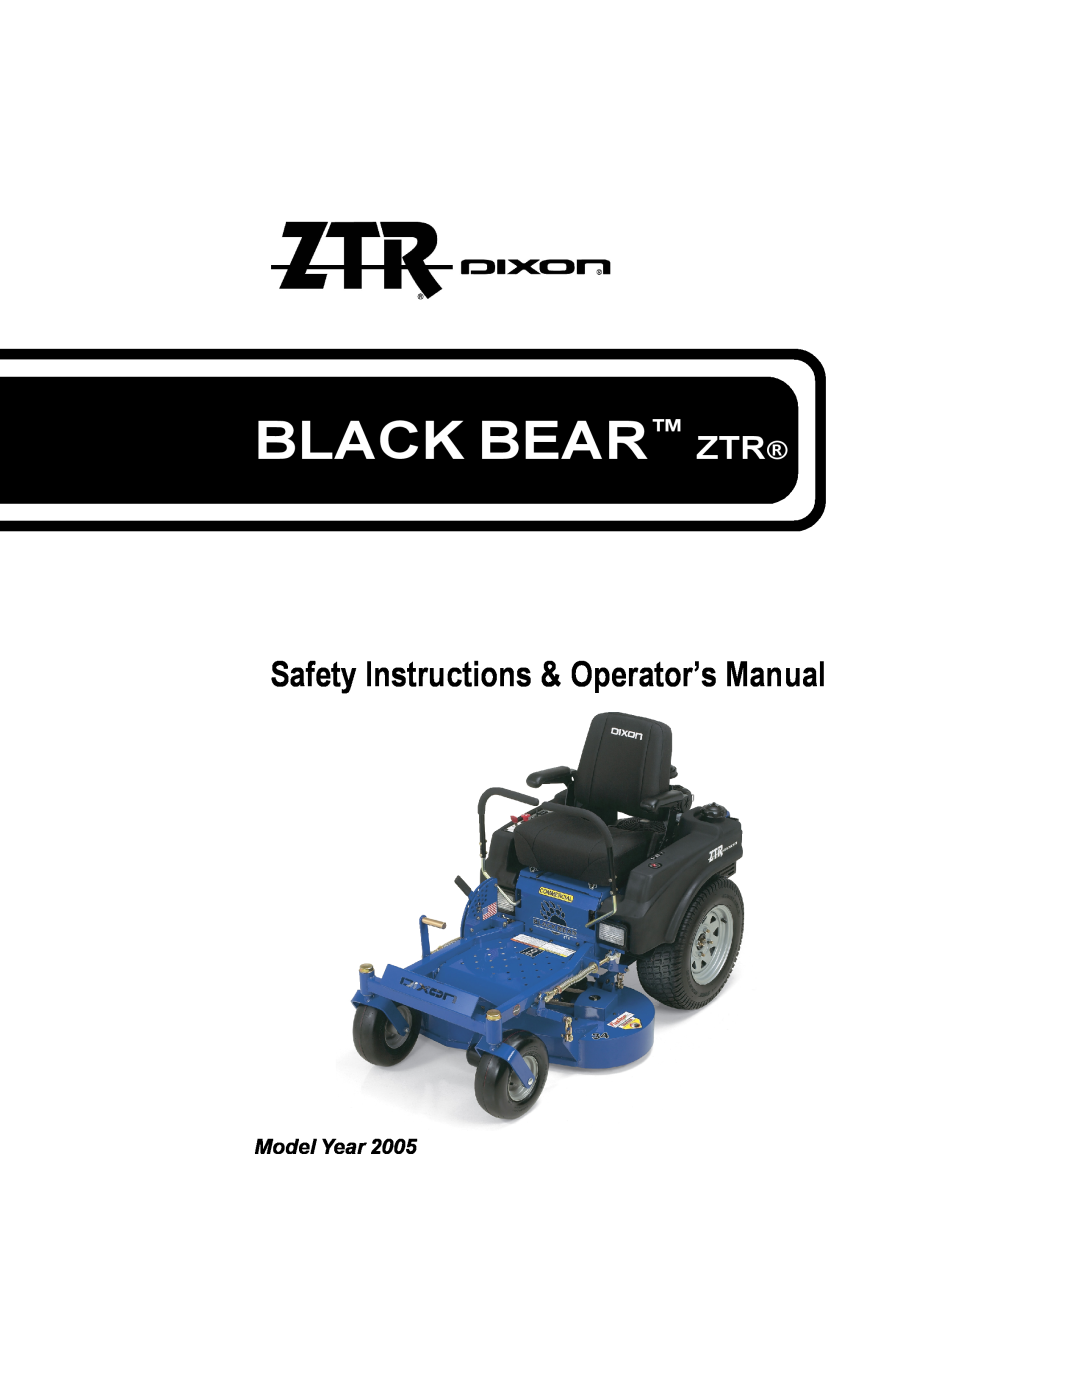 Dixon manual Black Bear Ztr, Safety Instructions & Operator’s Manual 